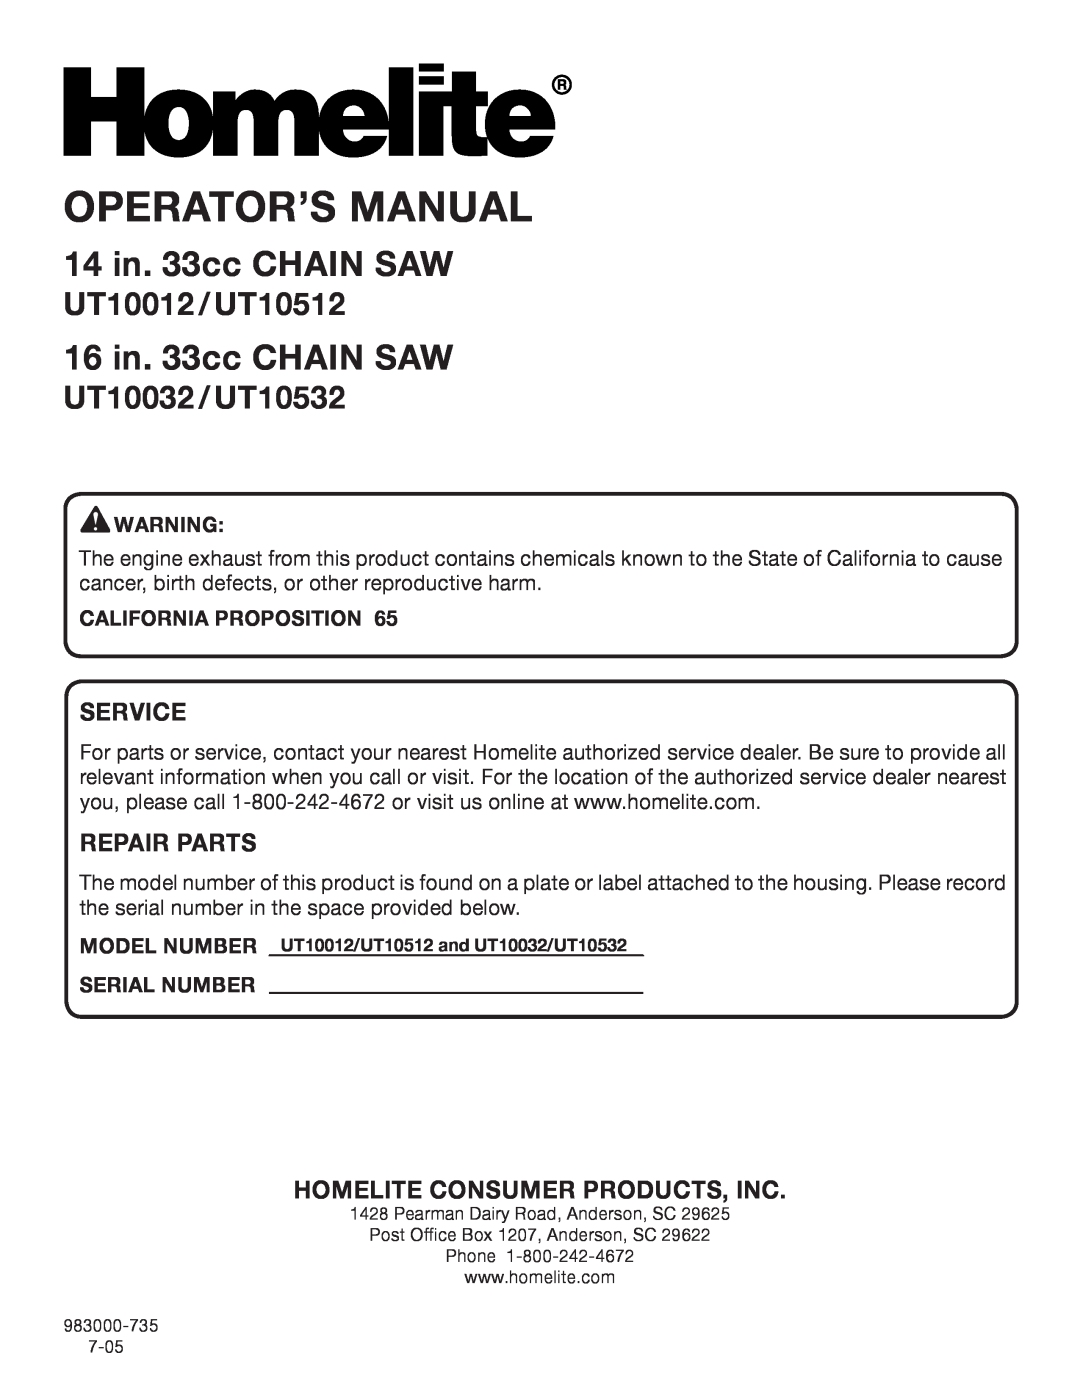 Homelite UT10012, UT10032 Service, Repair Parts, Homelite Consumer Products, Inc, Operator’S Manual, 14 in. 33cc CHAIN SAW 